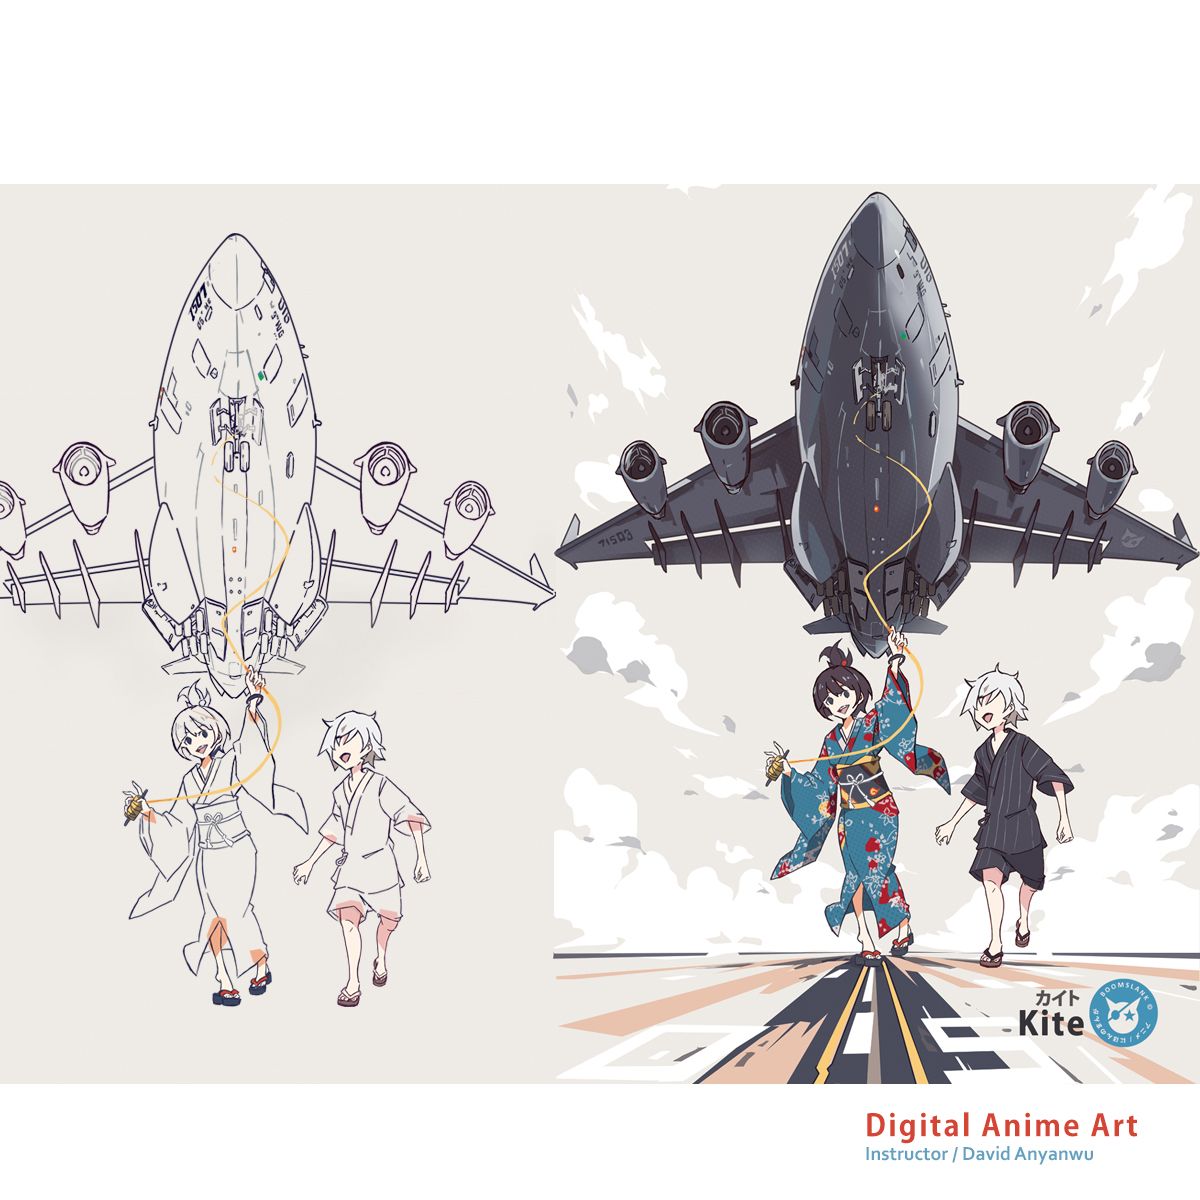 Museum-Inspired Digital Anime with David Anyanwu